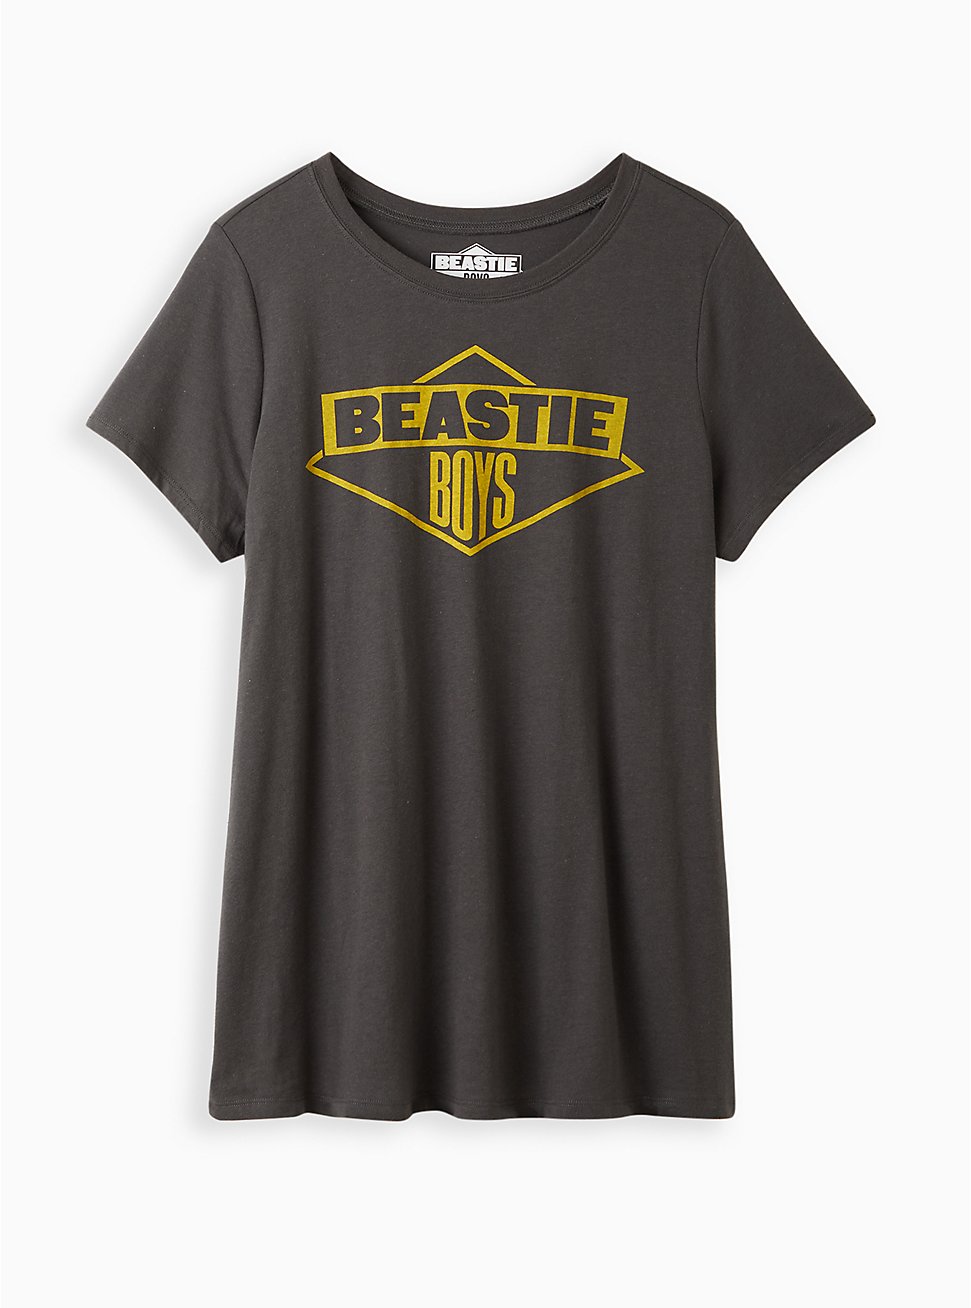 Classic Fit Crew Tee - Vintage Beastie Boys Black, DEEP BLACK, hi-res